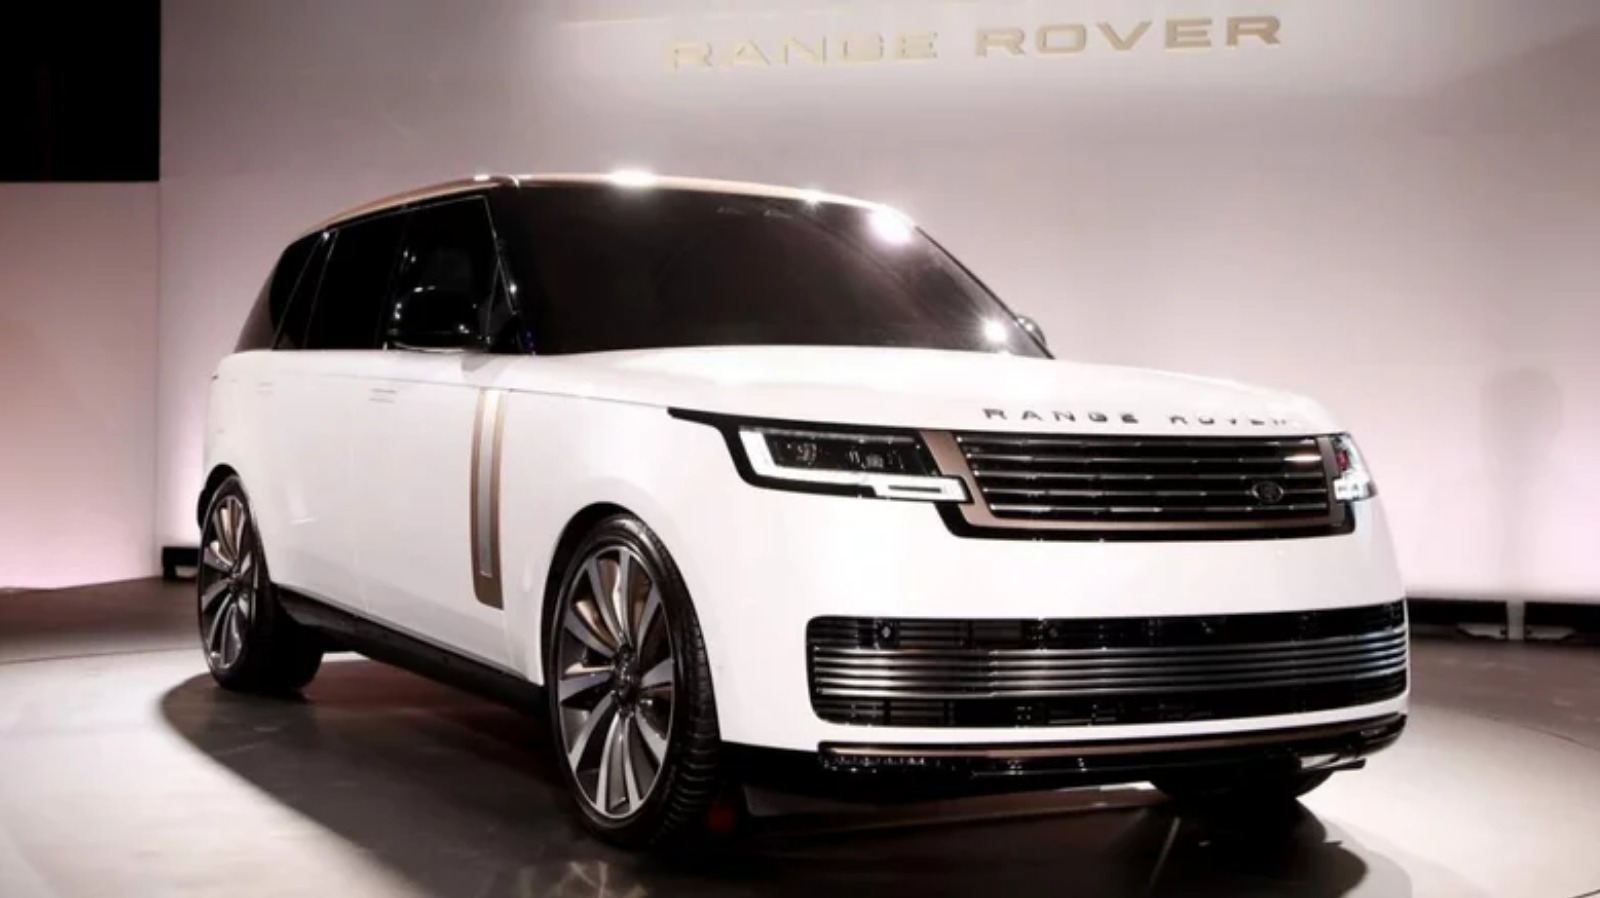 An Iconic Luxury SUV: Range Rover